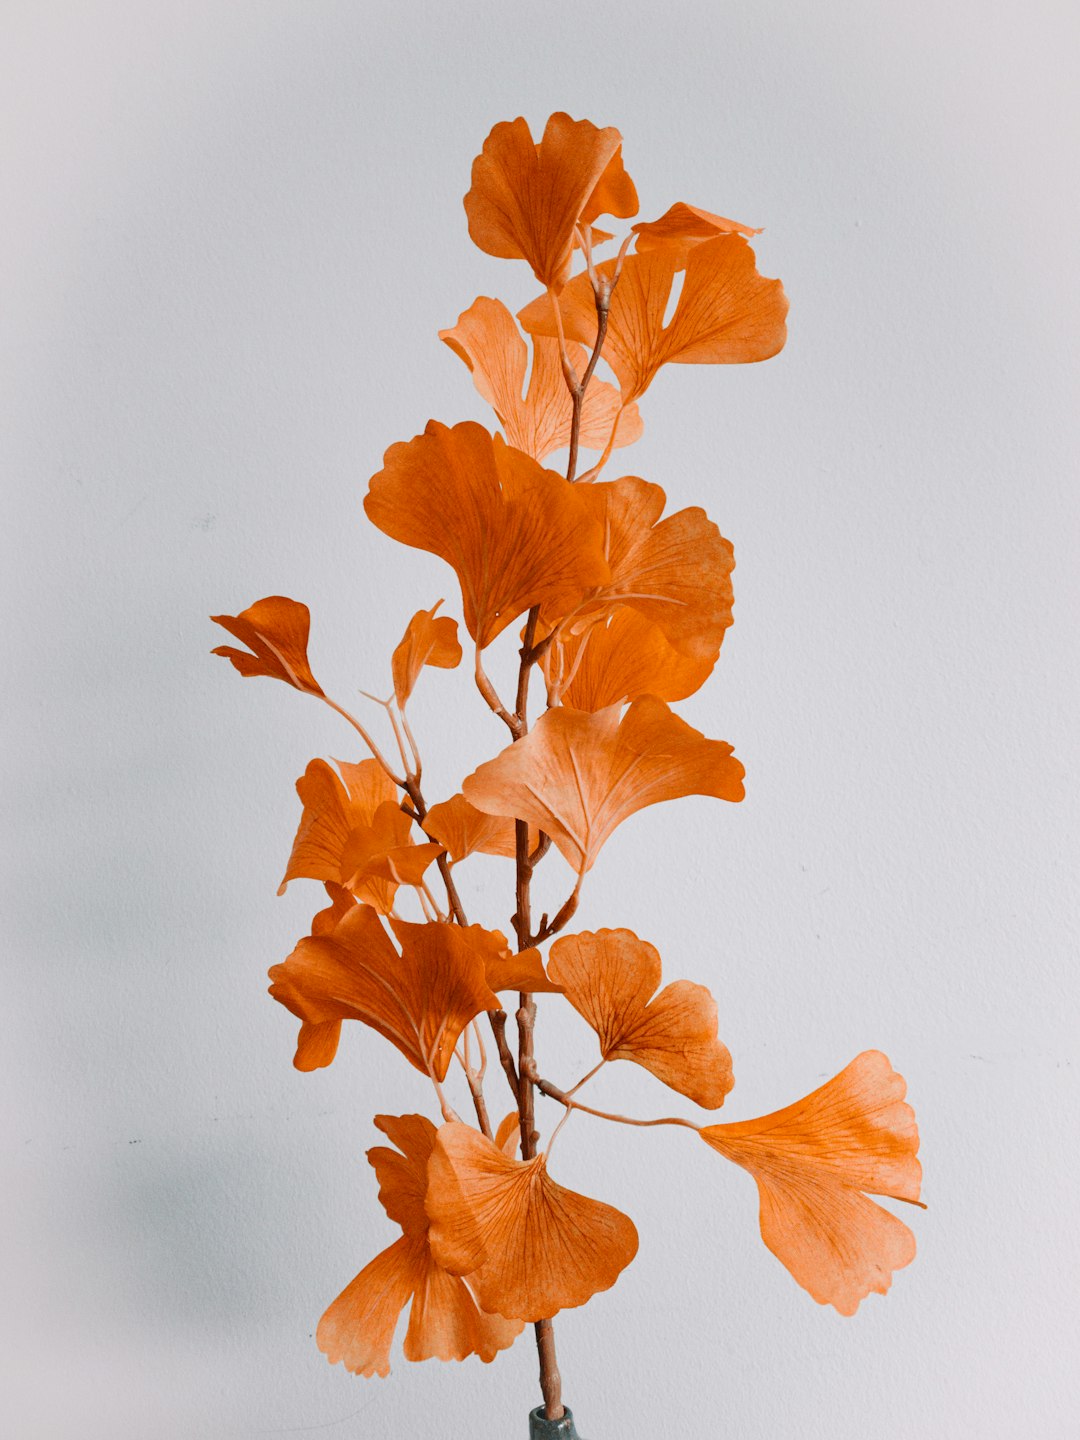 orange leaves on white surface